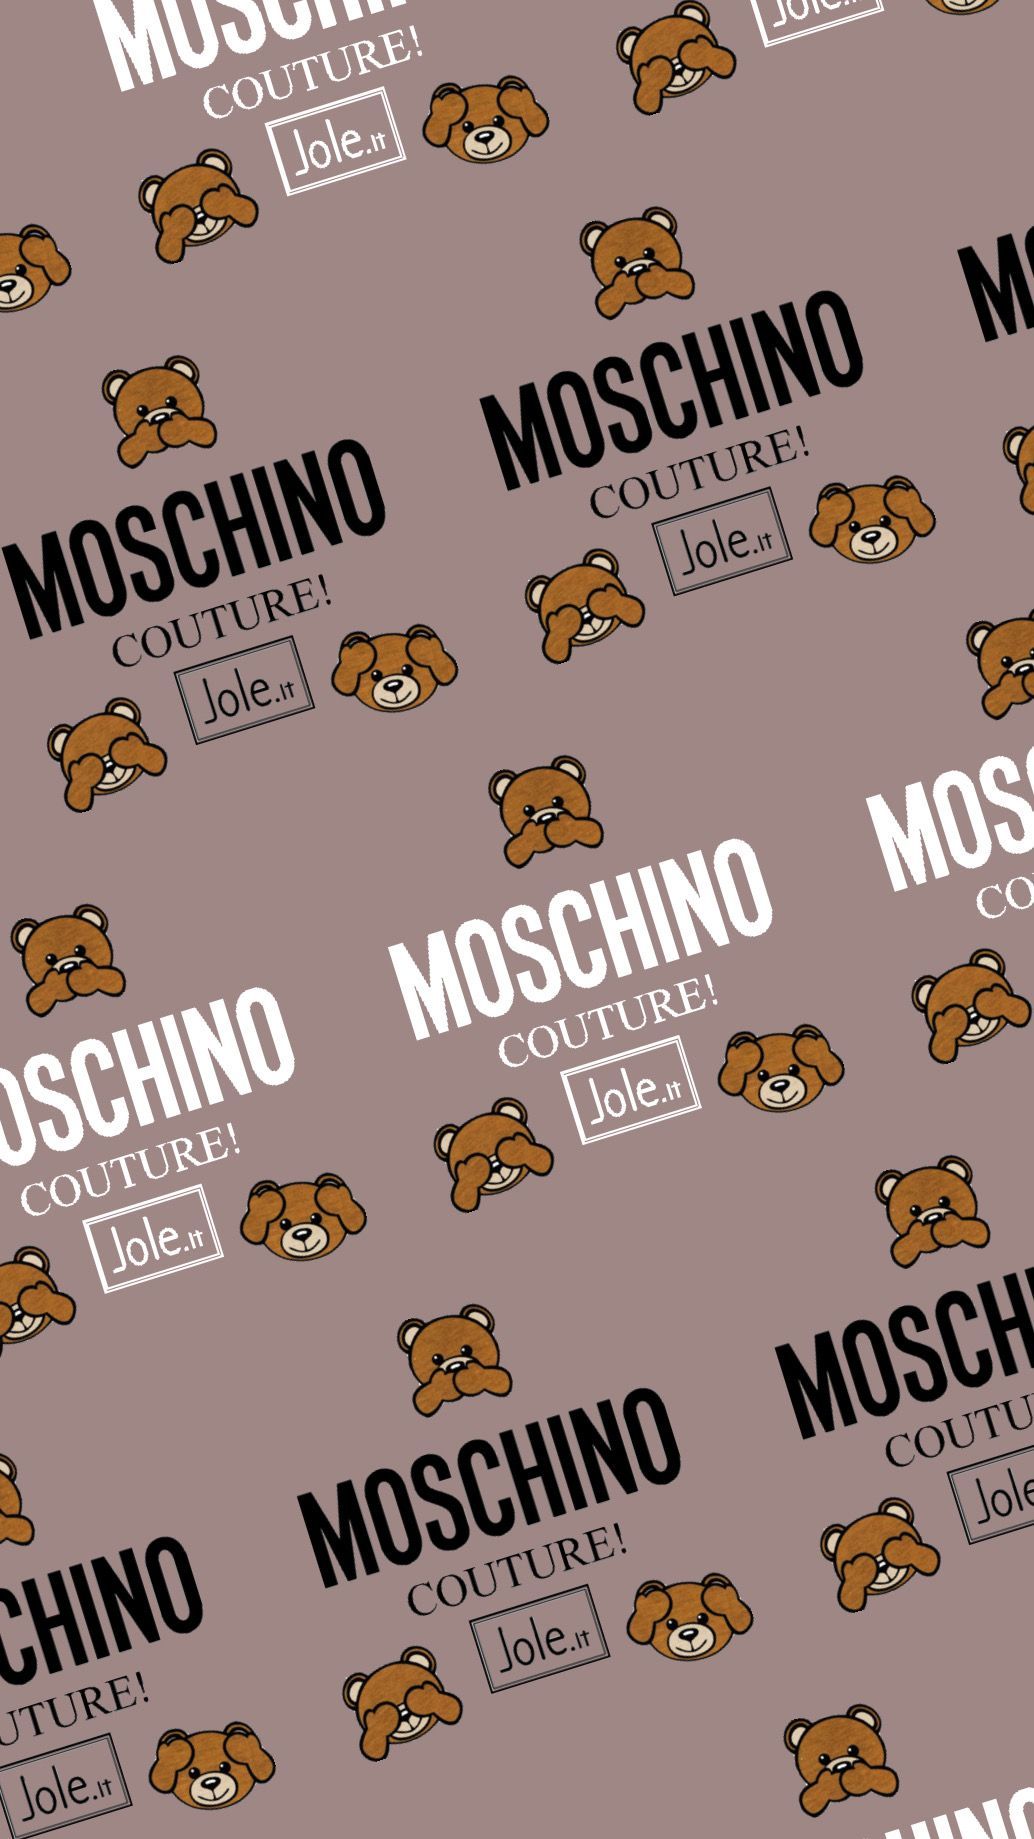 Moschino Wallpapers - 4k, HD Moschino Backgrounds on WallpaperBat